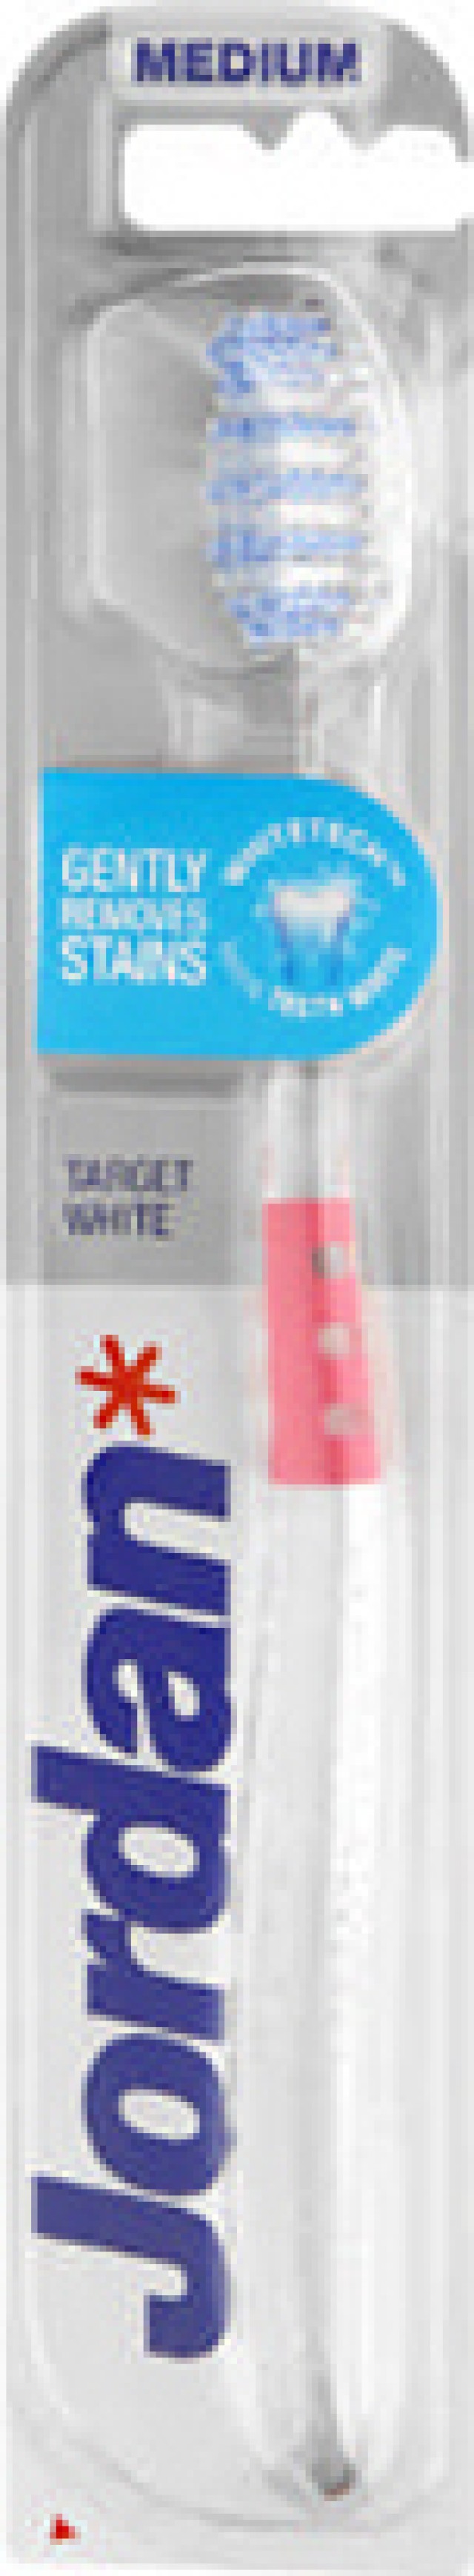 Jordan Target White Medium Οδοντόβουρτσα Μέτρια Λευκό / Ροζ 1 Τεμάχιο